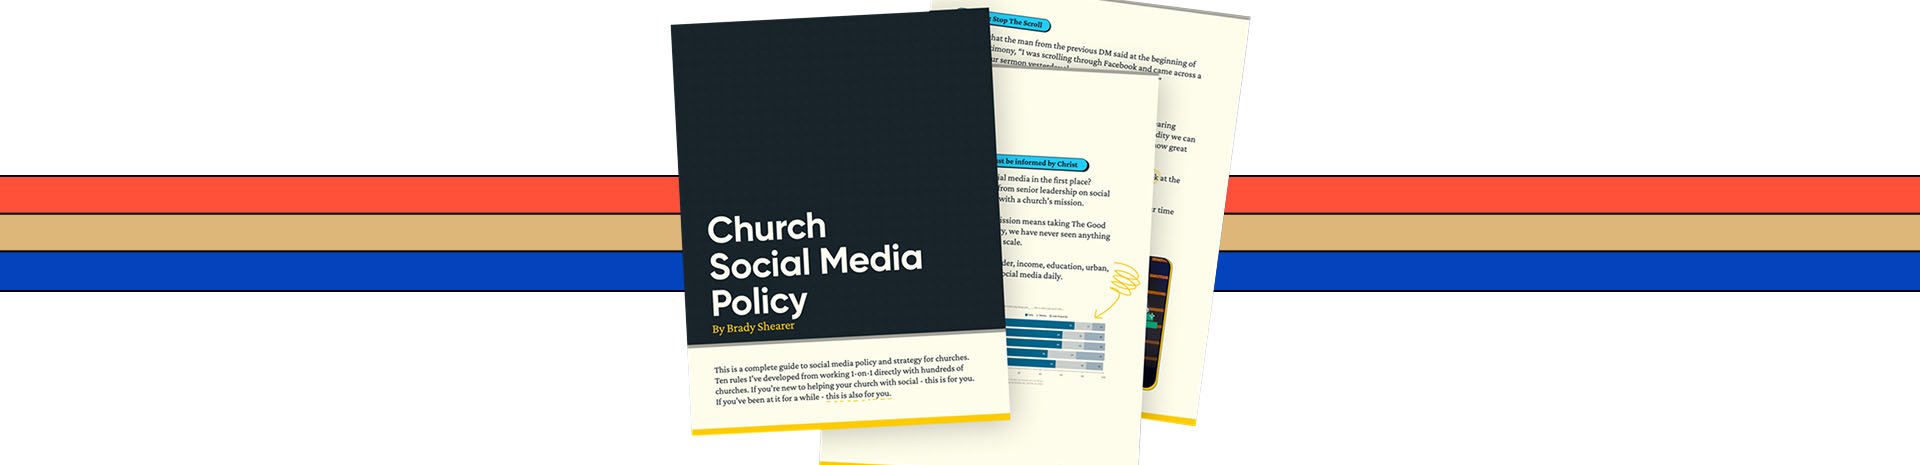 Brady Shearer - Pro Church Tools - Church Social Media Policy